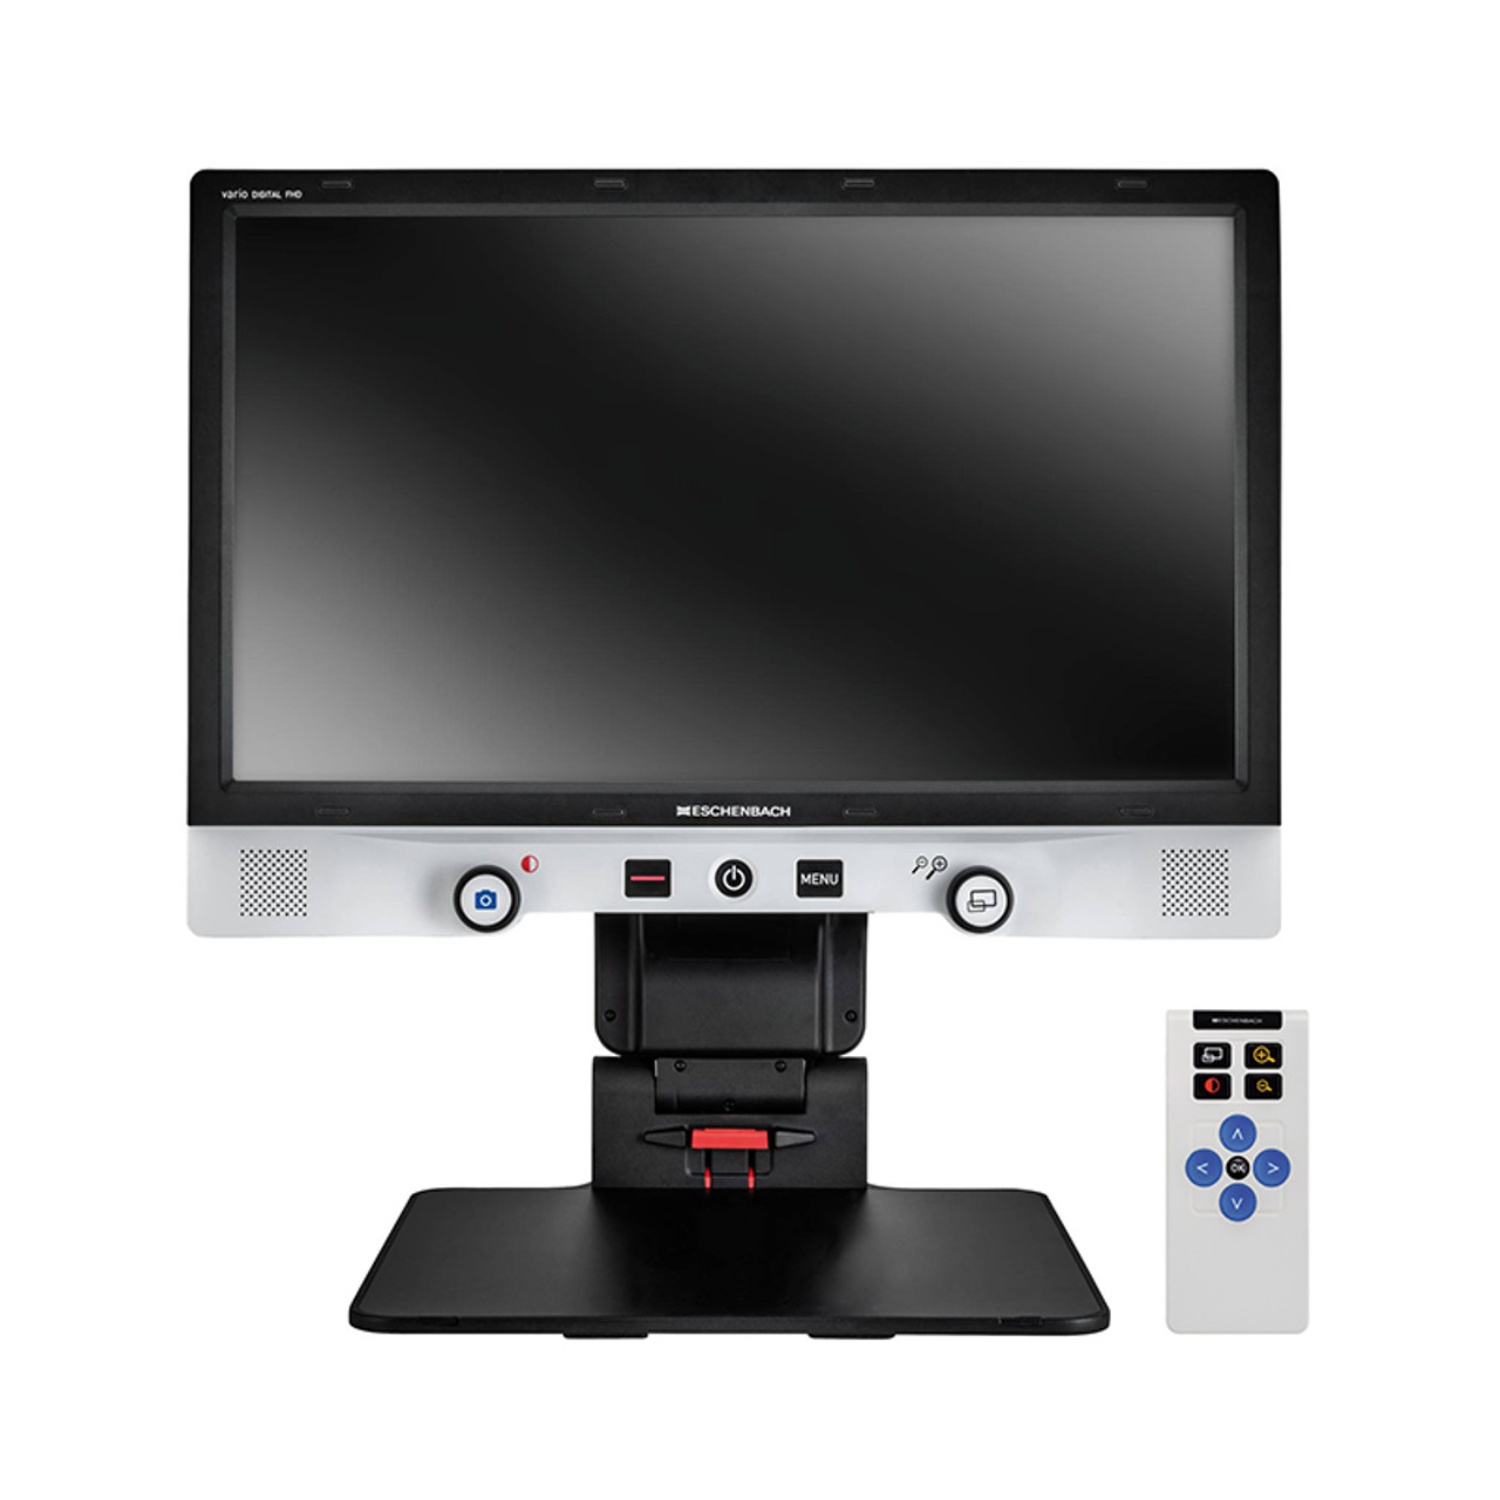 Image of the front of a Vario Digital 22 FHD Advanced desktop CCTV video magnifier from Eschenbach Optik